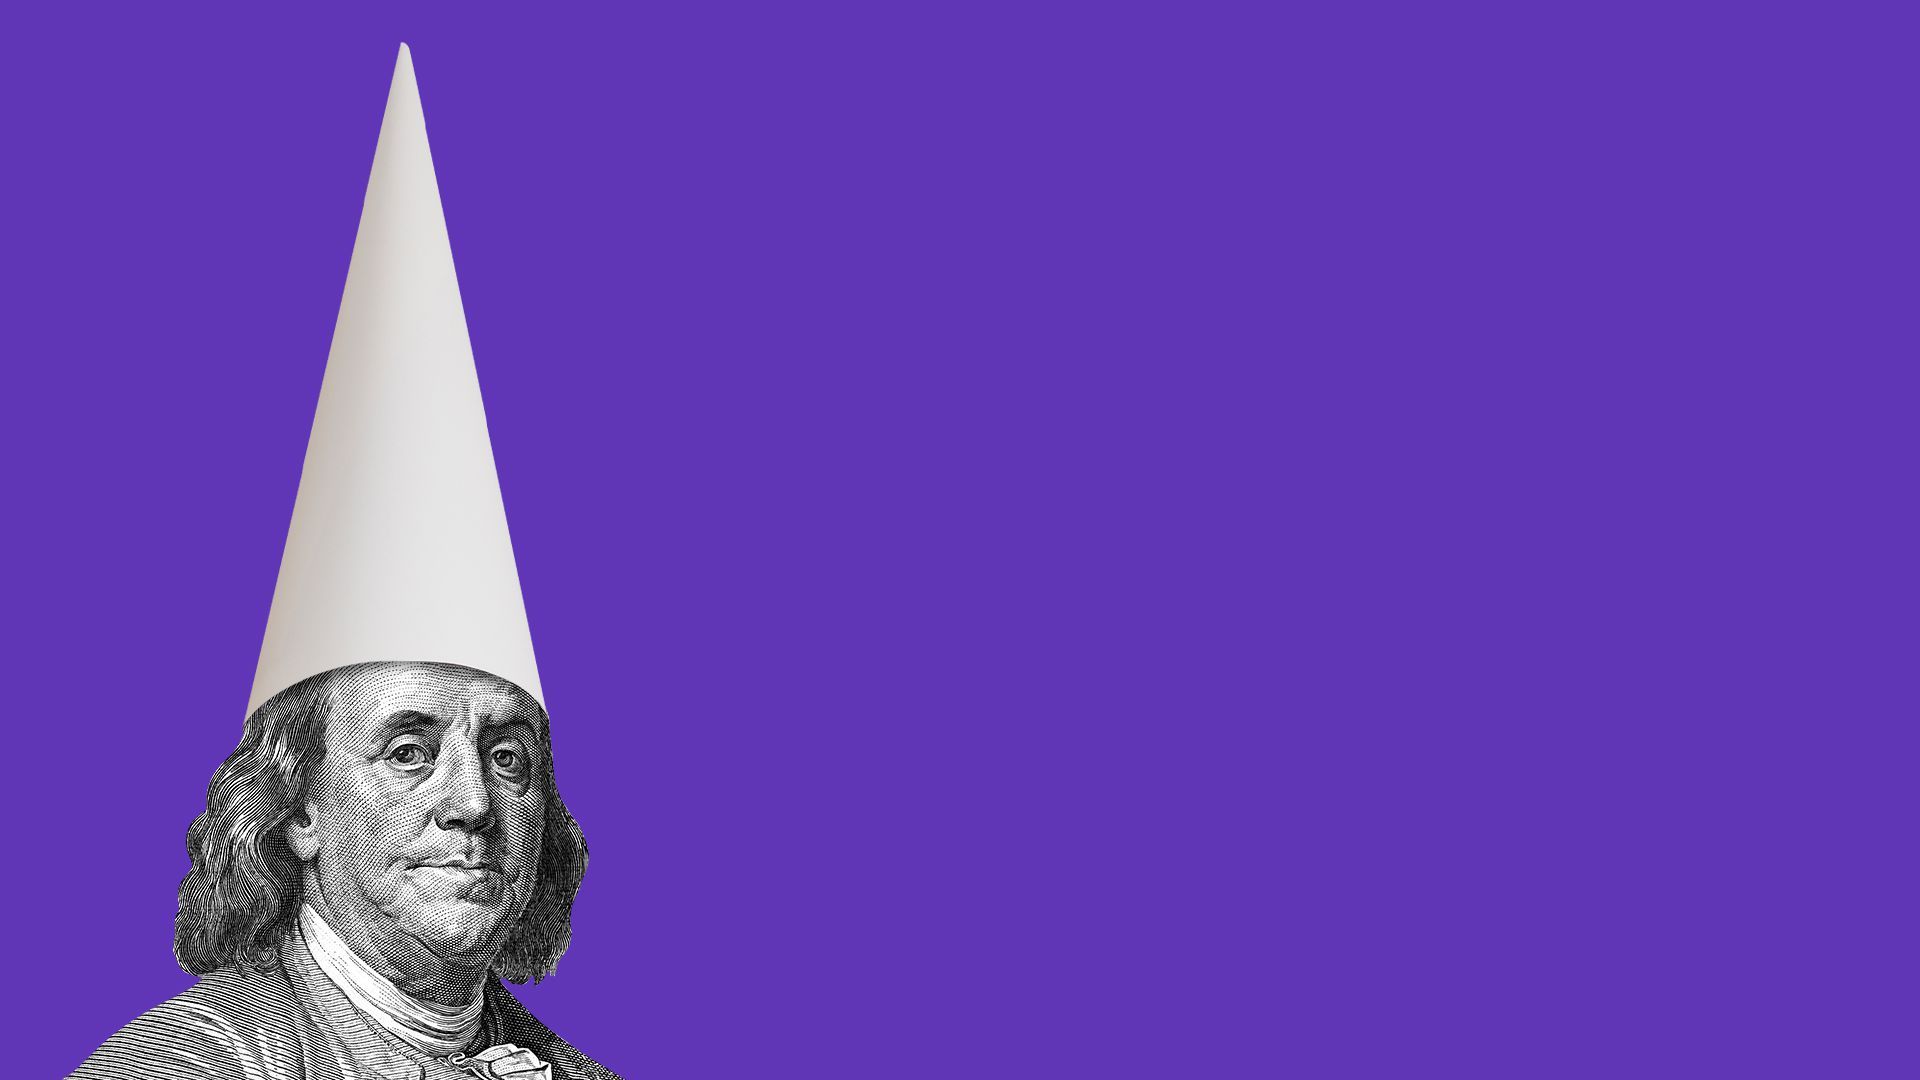 Illustration of Ben Franklin wearing a dunce cap